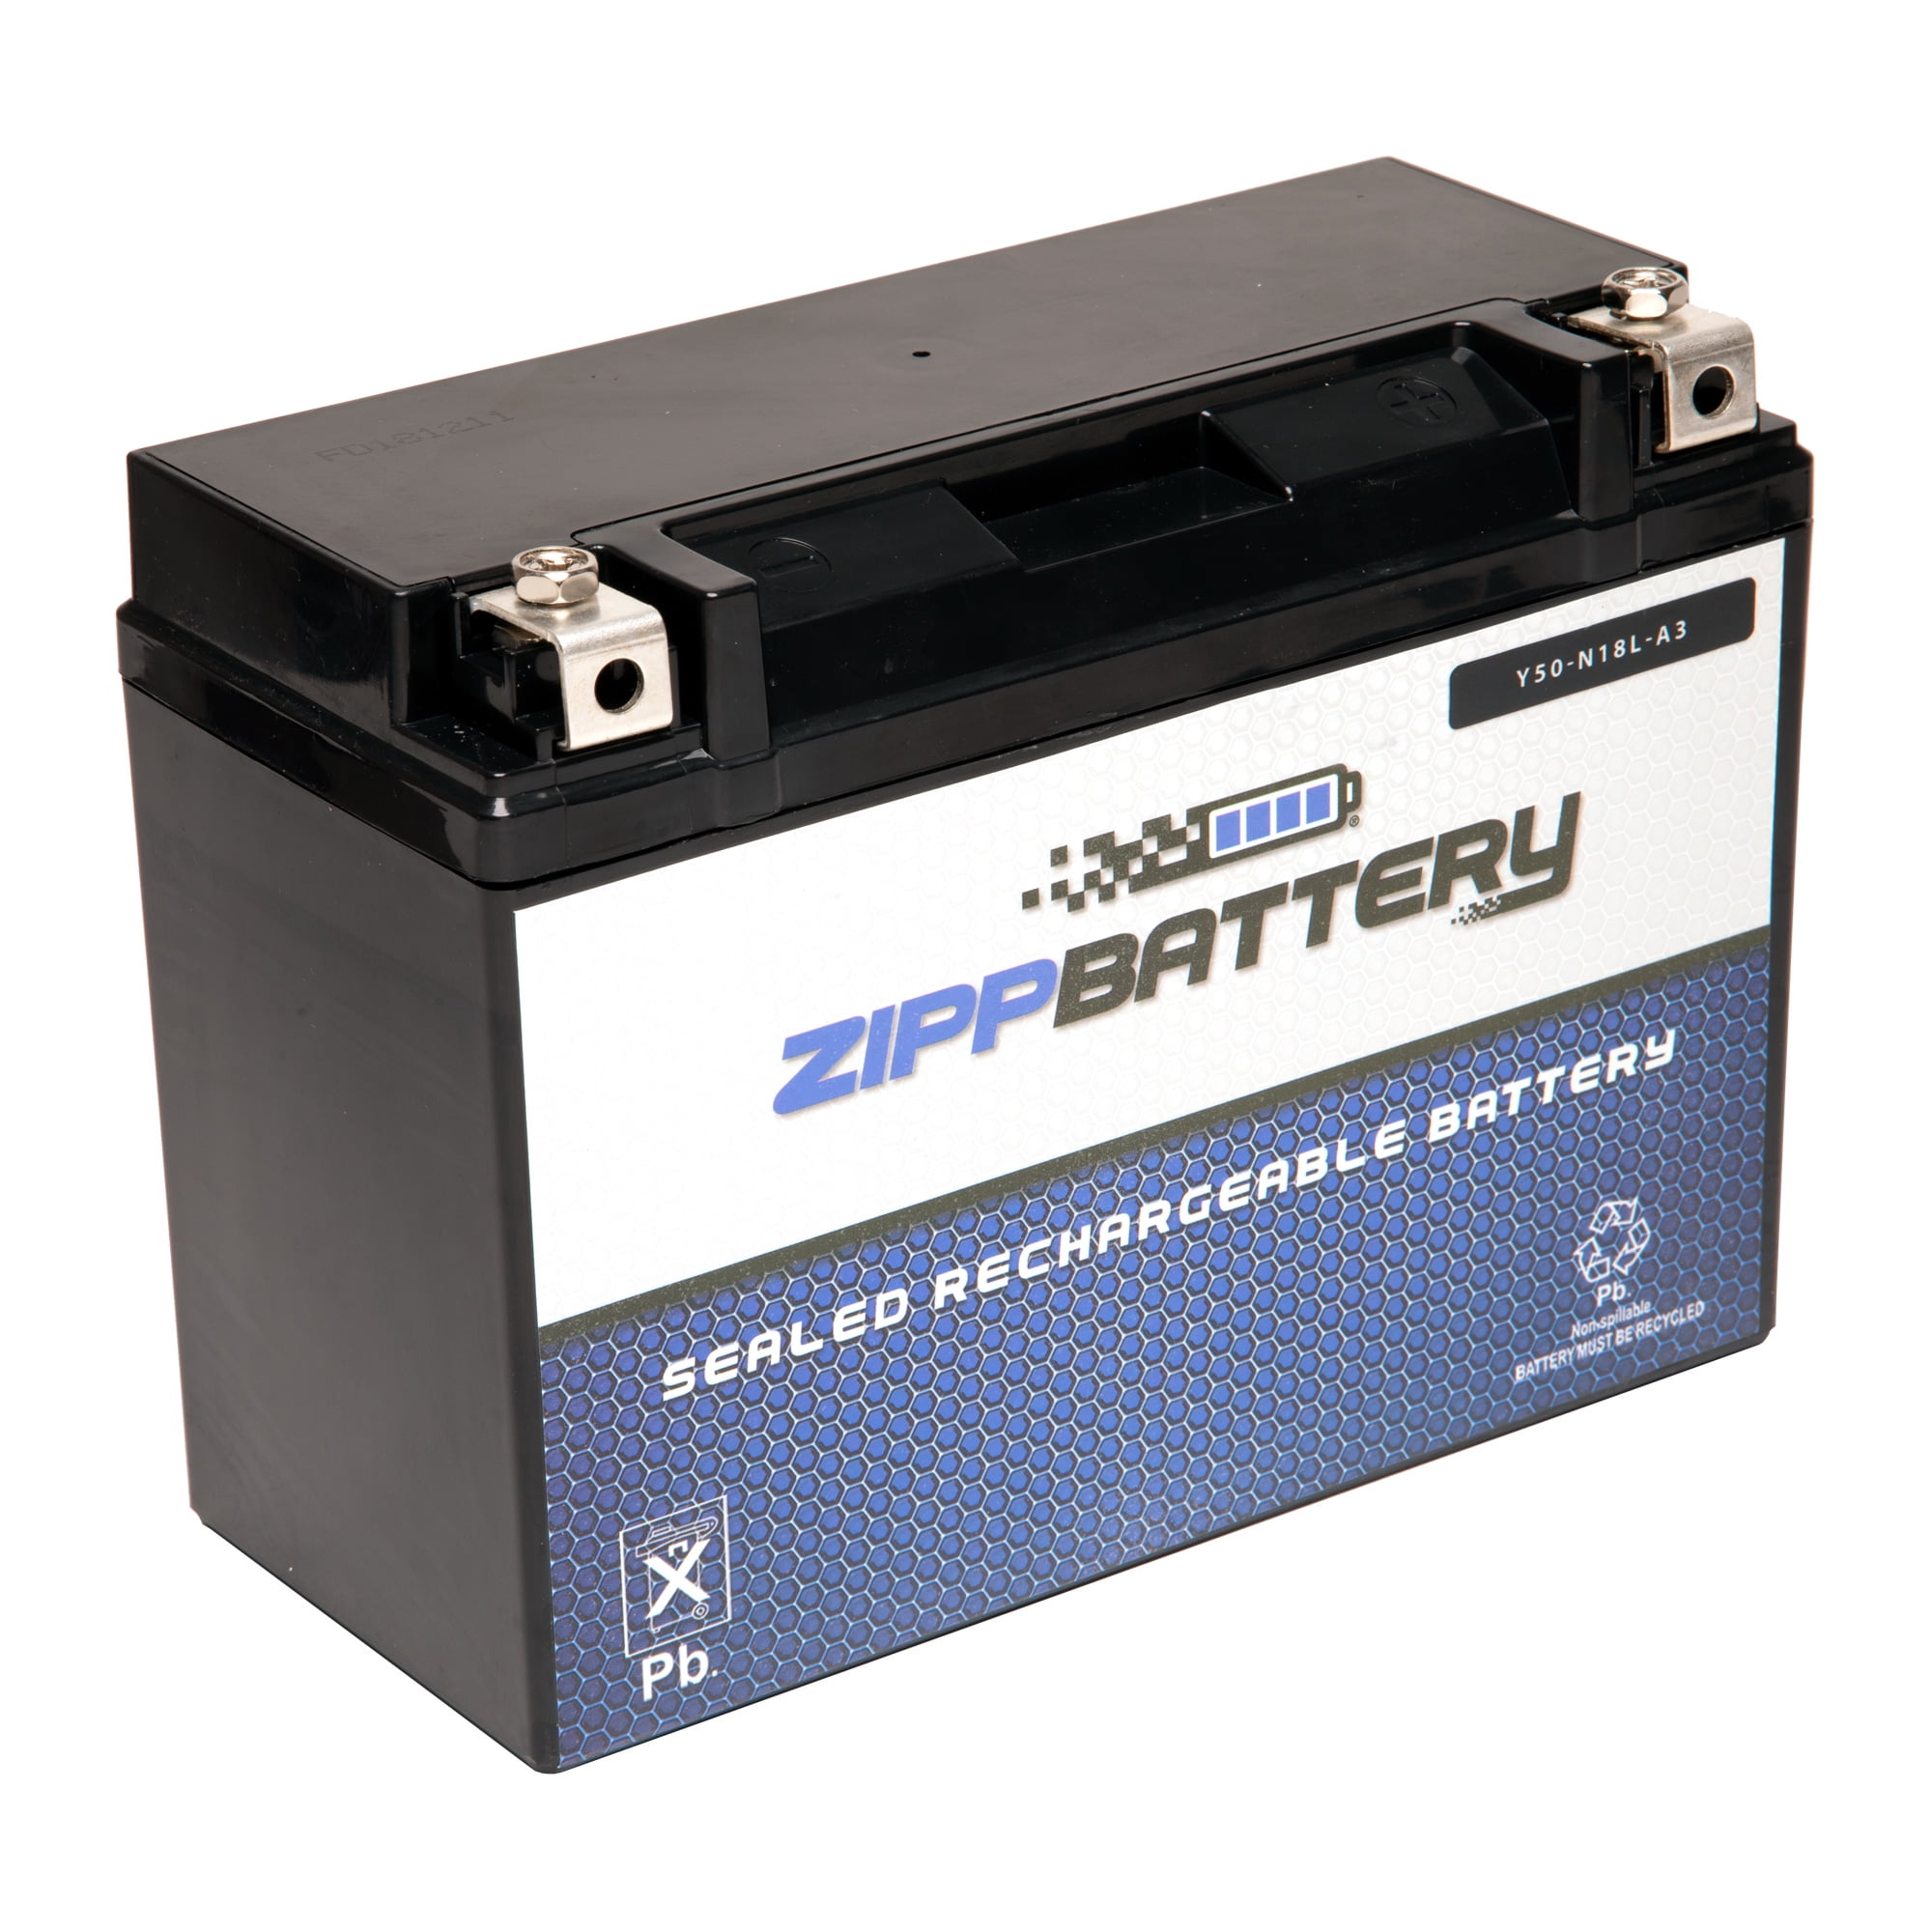 Zipp Battery Y50-N18L-A3 (50-N18L-A3 12 Volts,20 Ah, 260 CCA) Motorcycle  Battery for Kawasaki 1500cc Vn1500 Vulcan 88 Se 1995